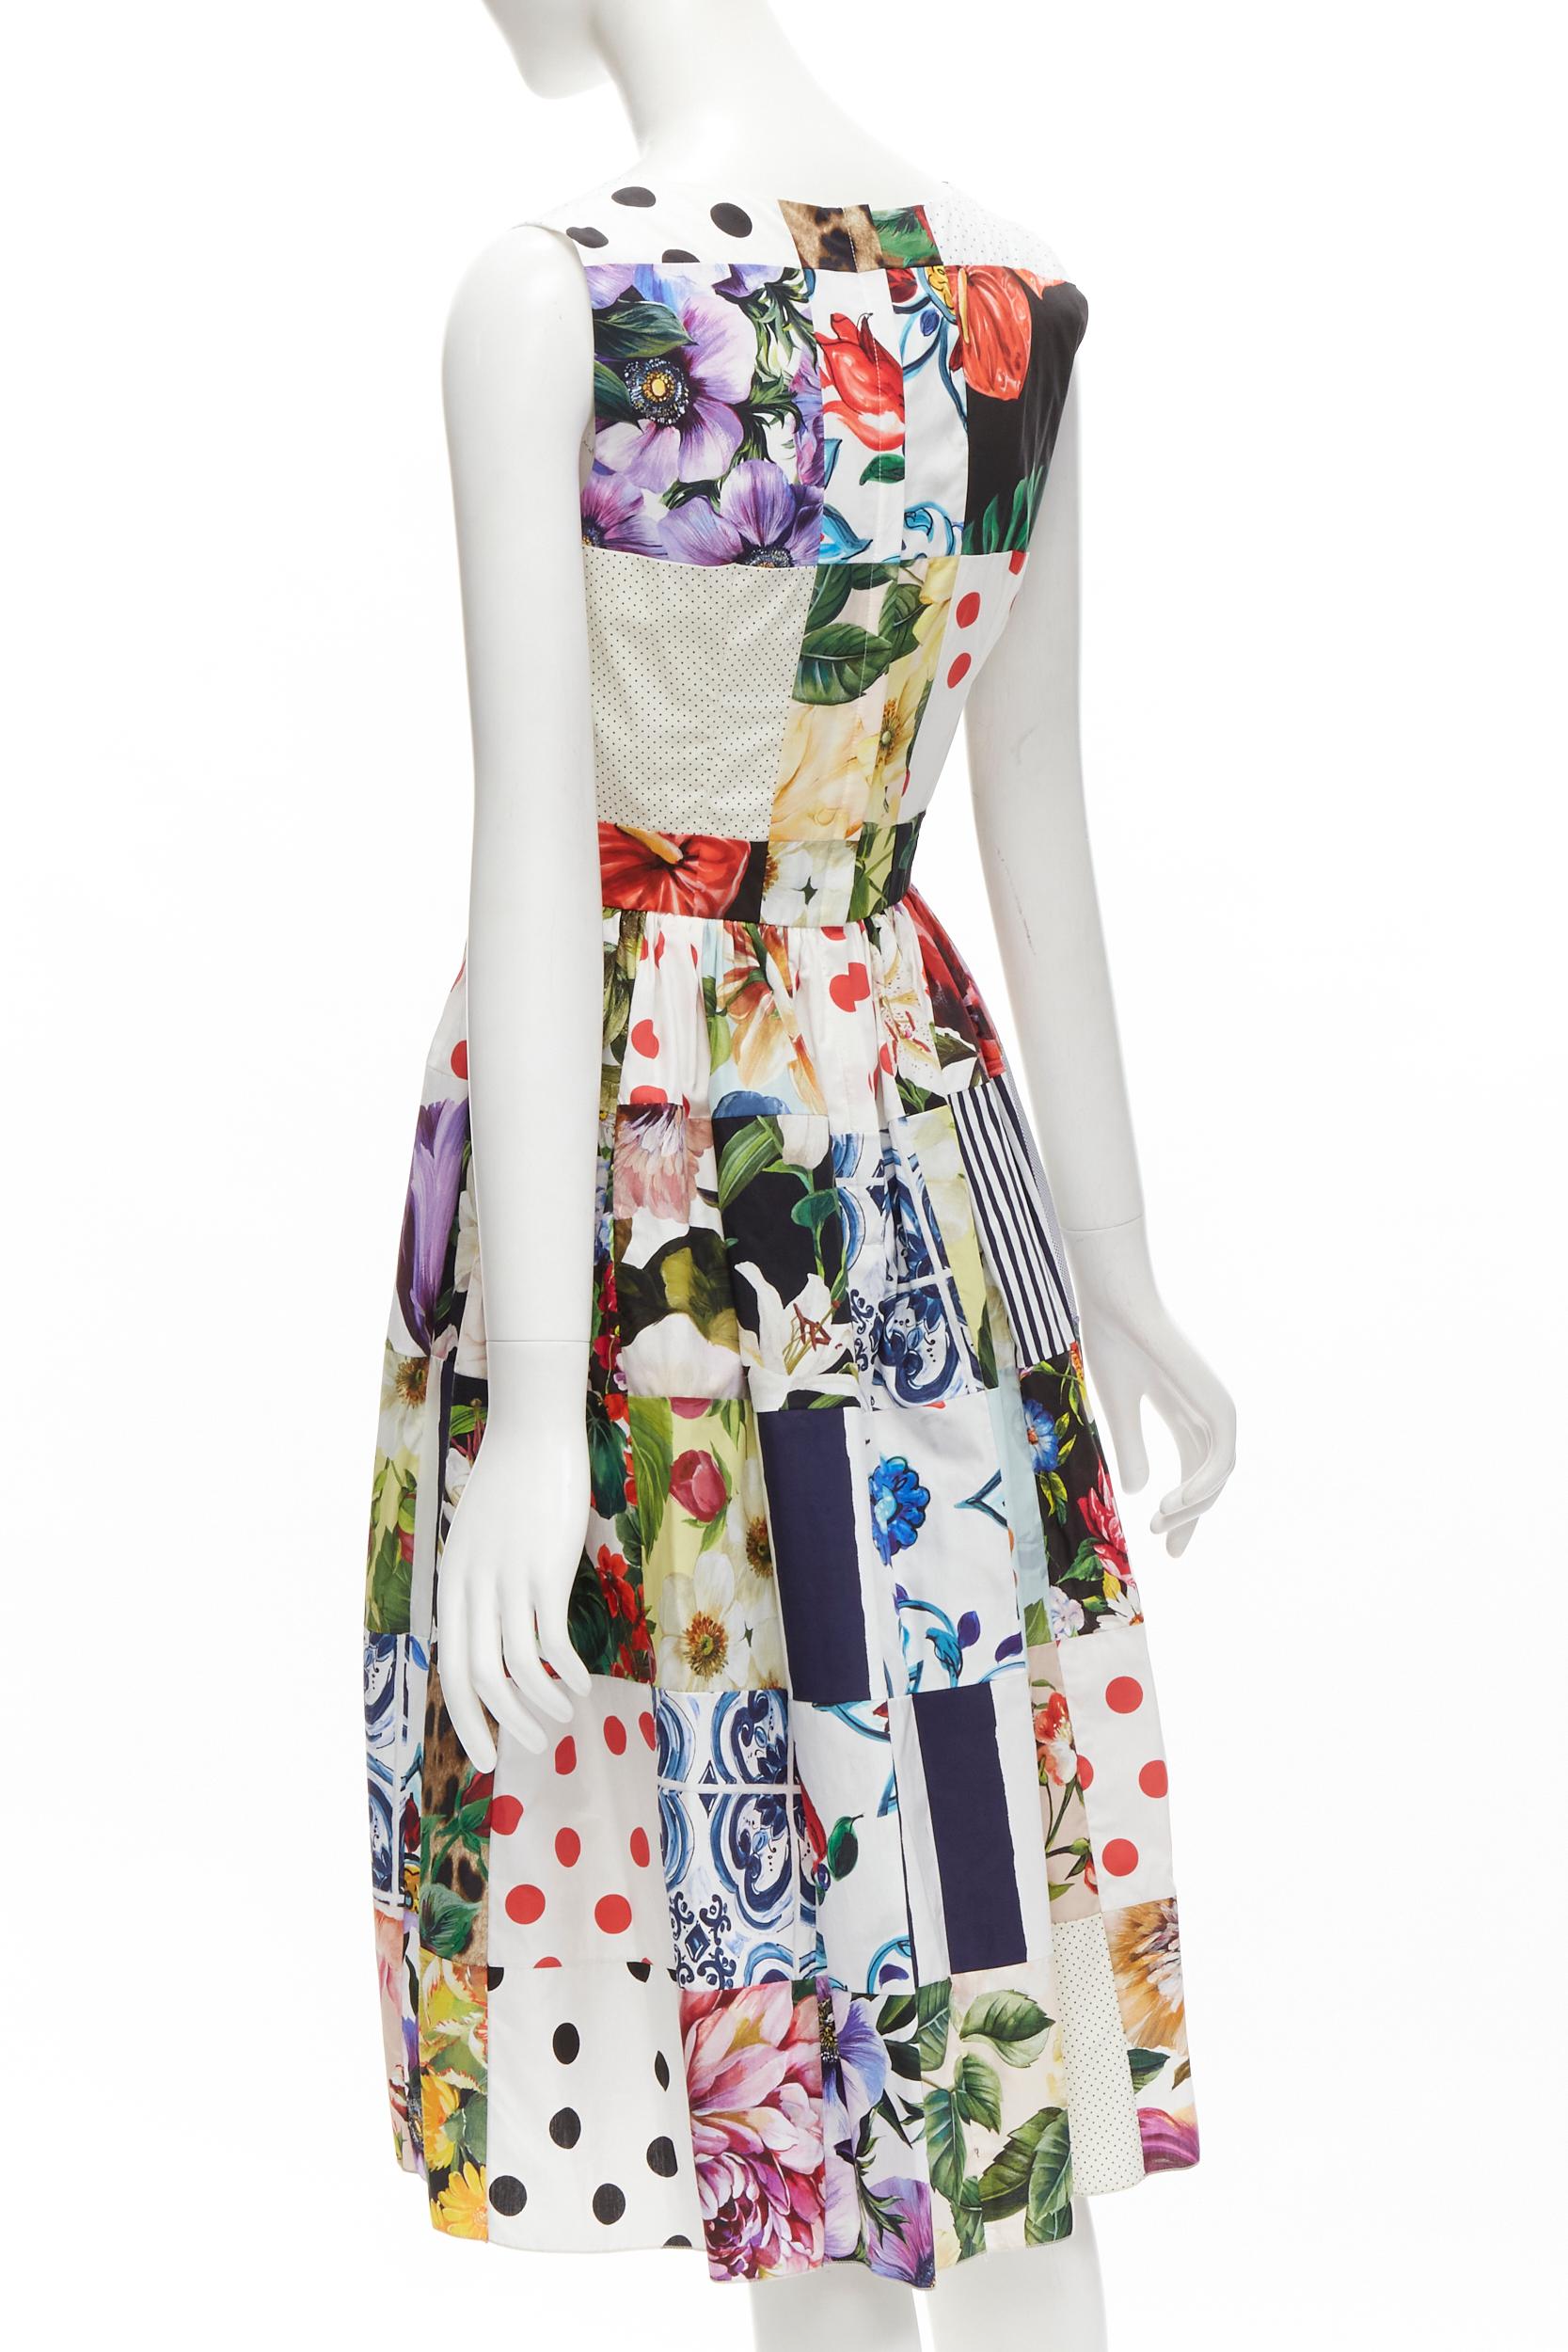 DOLCE GABBANA mixed patchwork cotton print floral flared midi dress IT38 XS 2